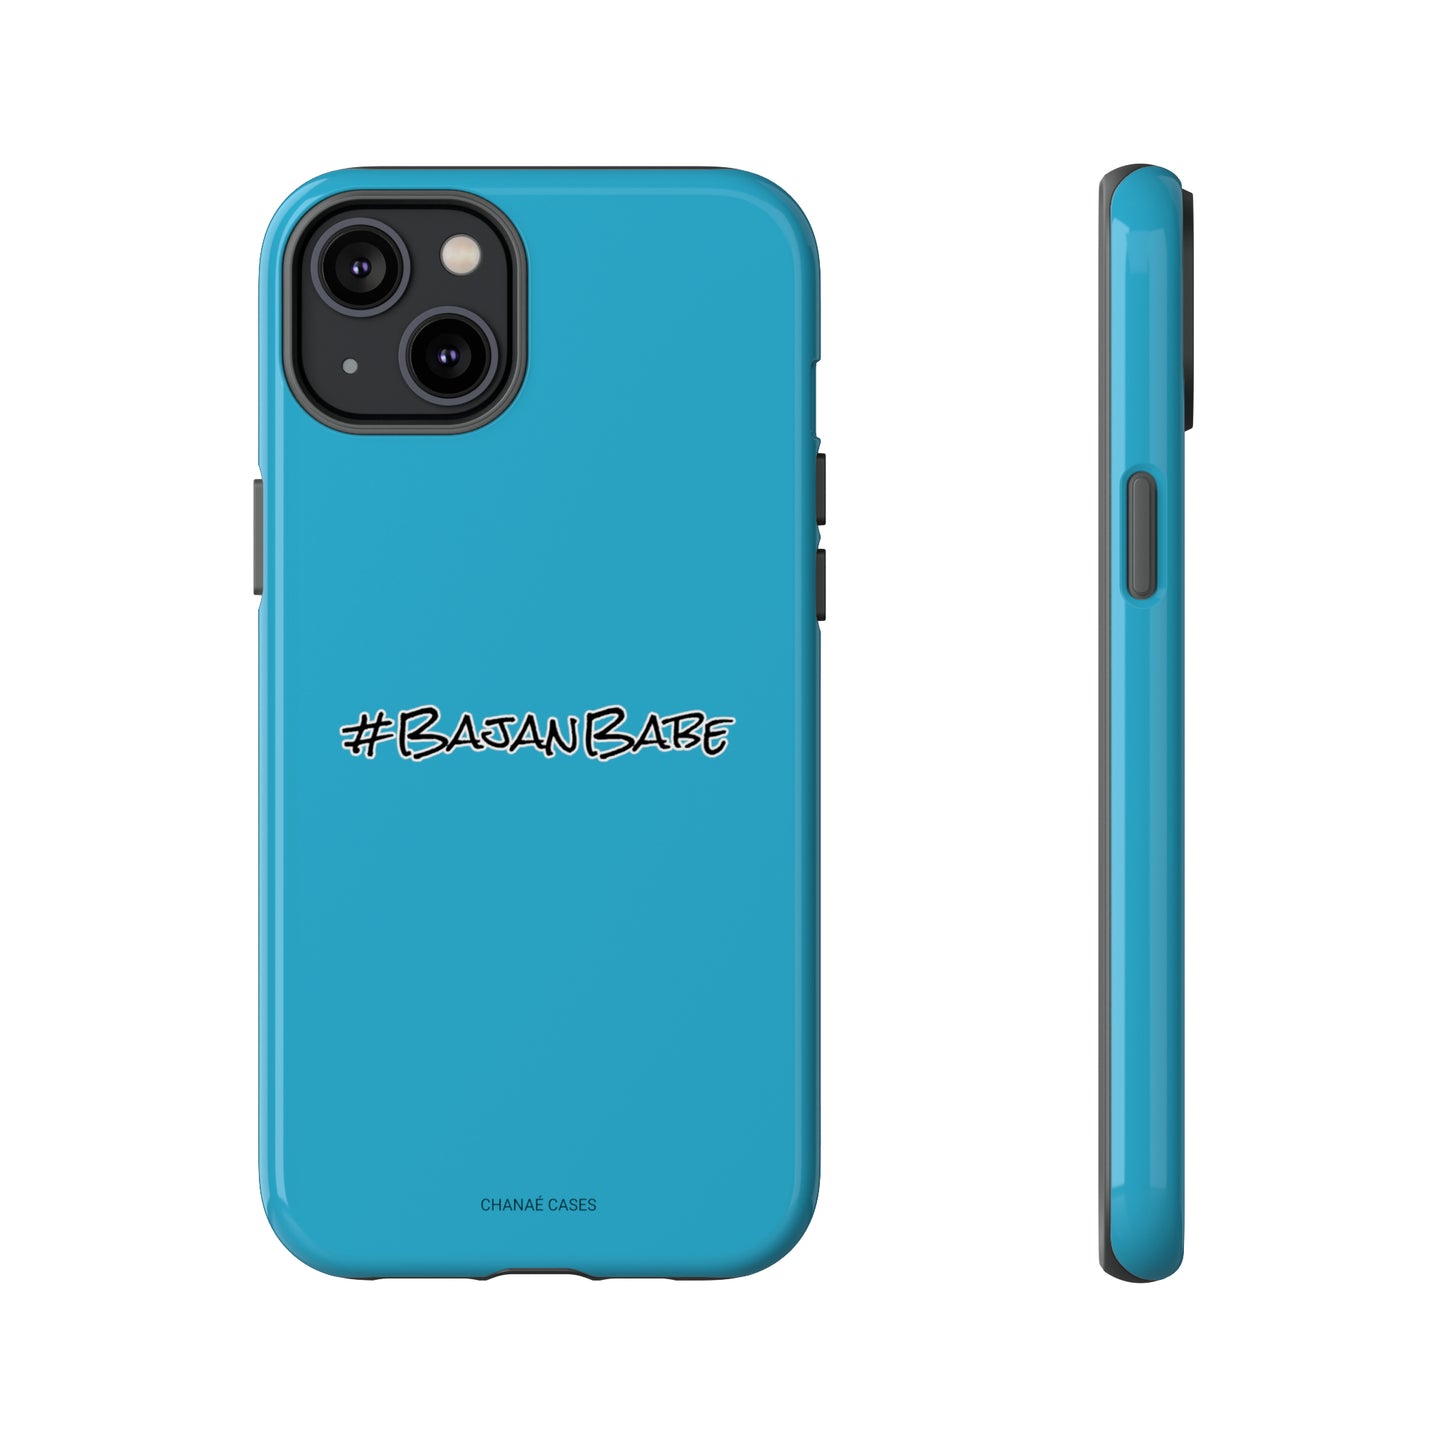 #BajanBabe iPhone "Tough" Case (Turquoise)